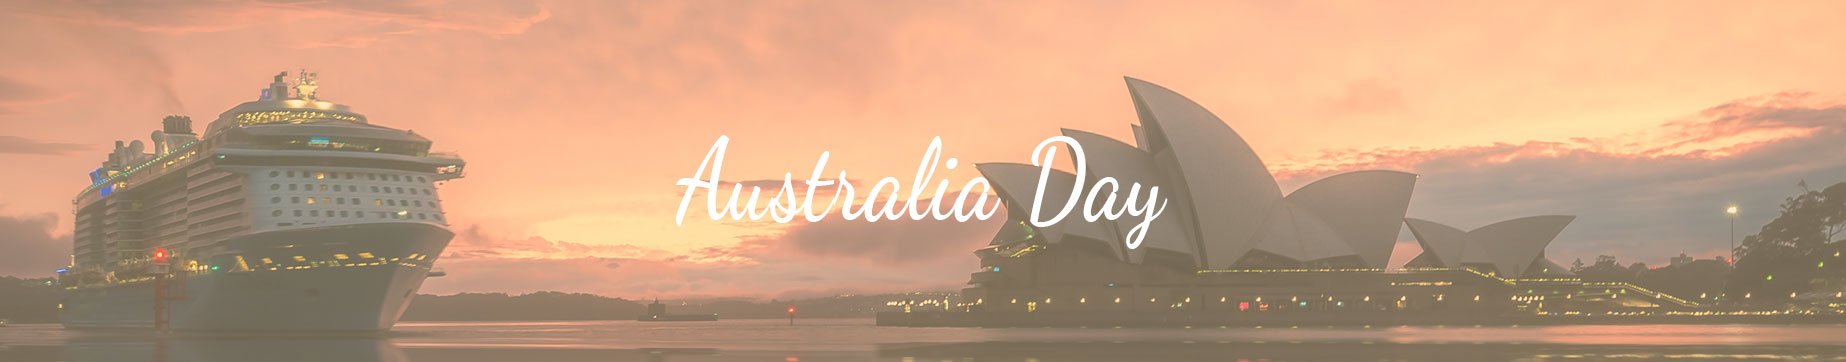 Celebrations Australia Day Over $100